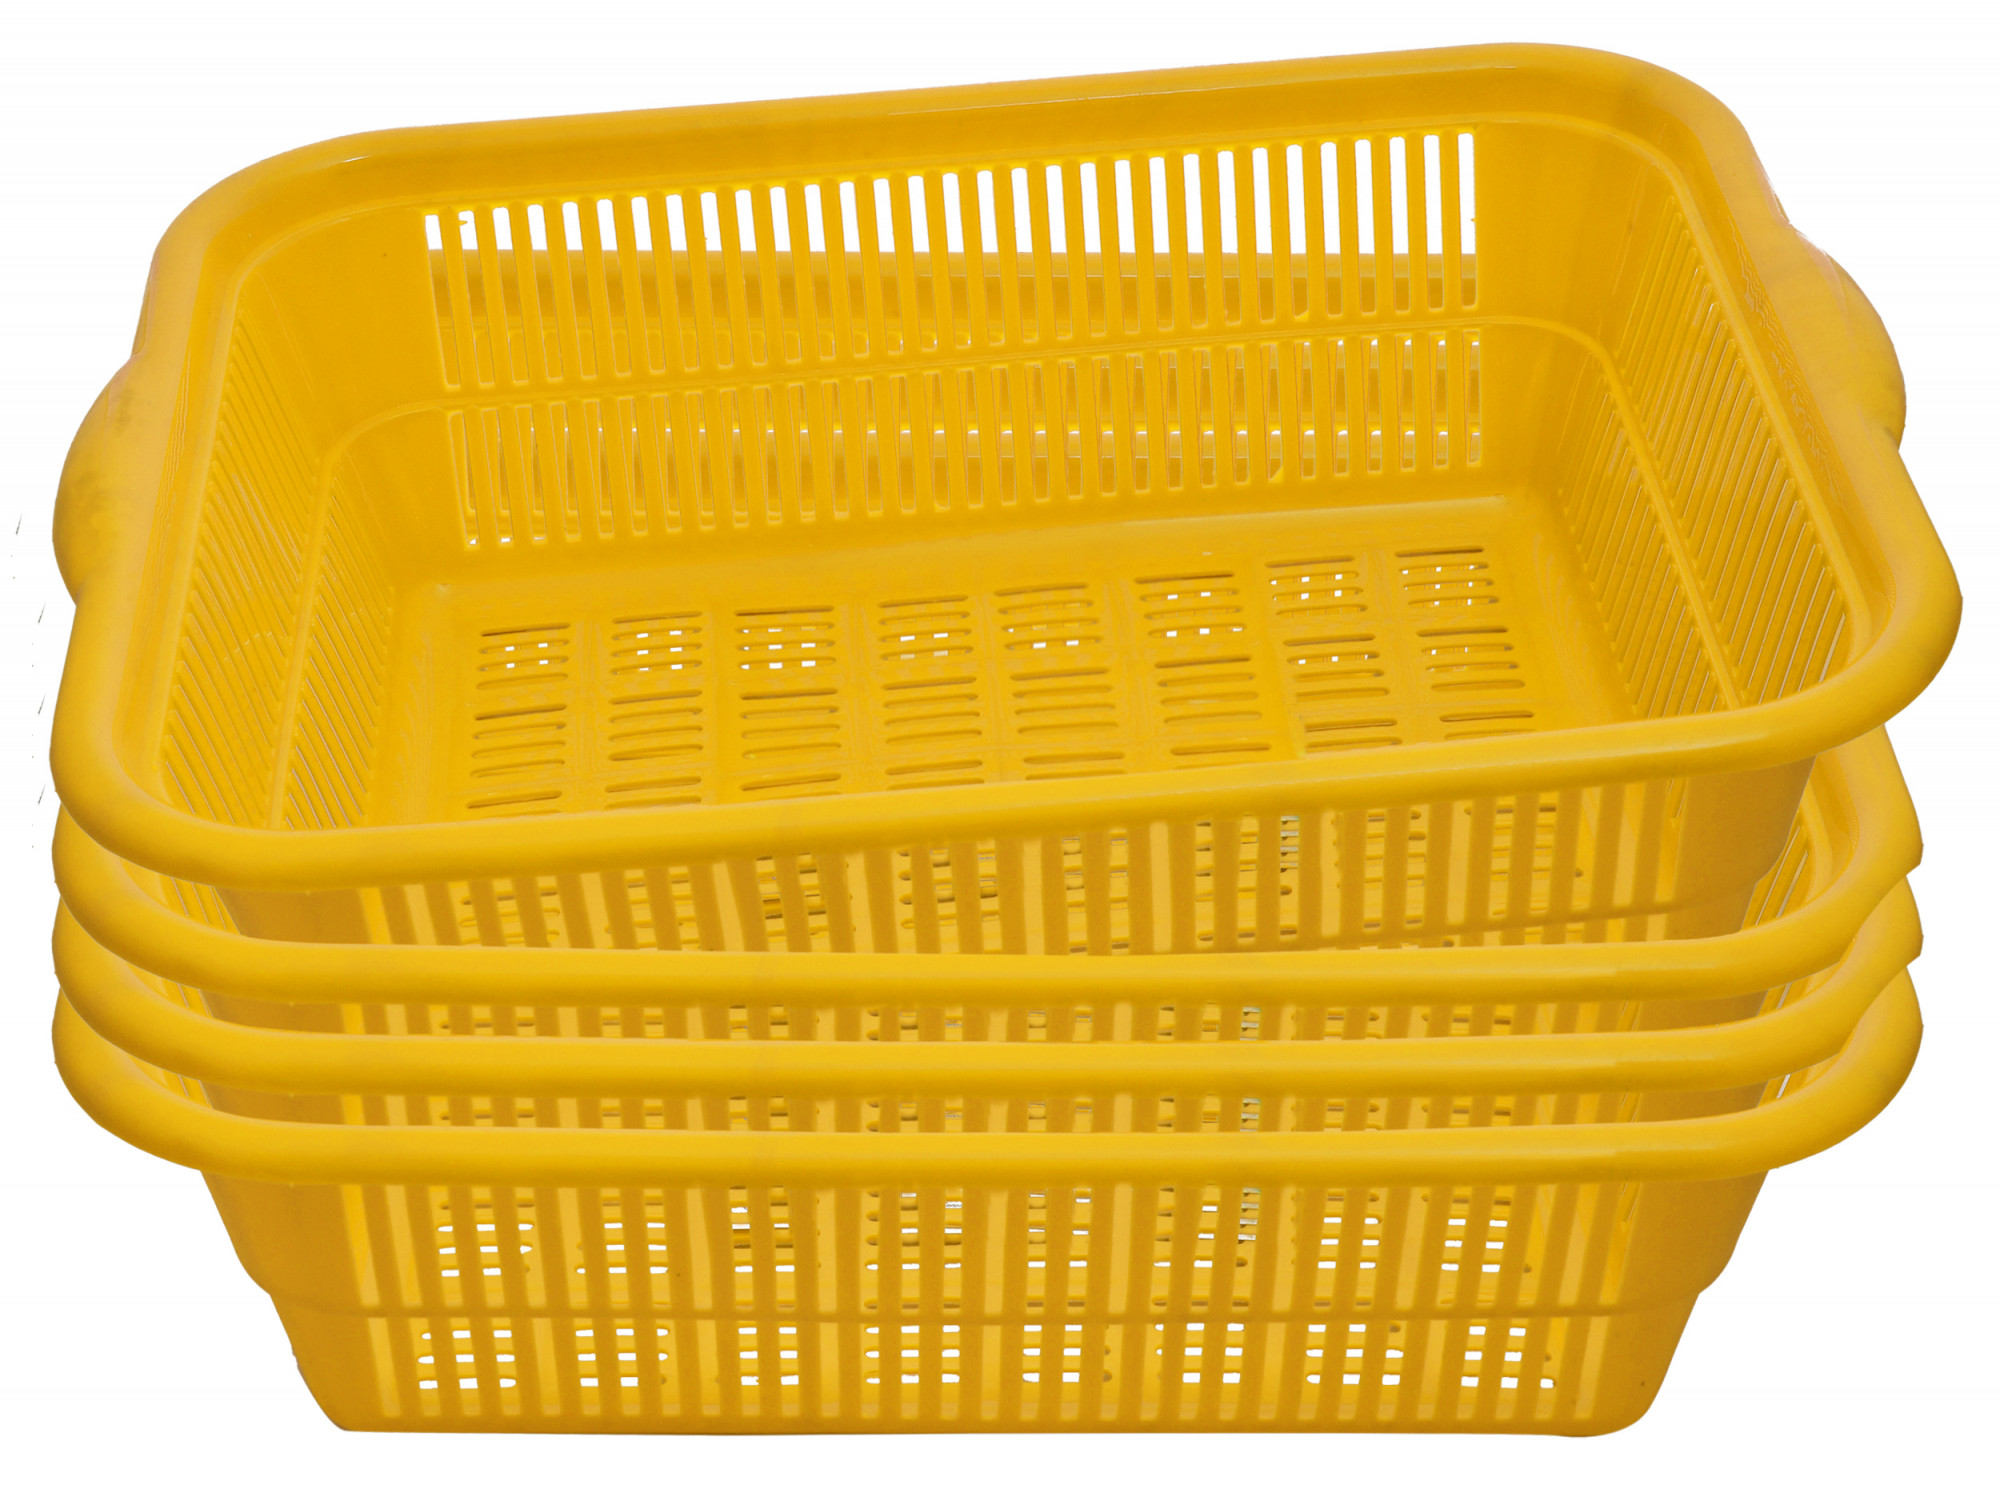 Kuber Industries Plastic Kitchen Small Size Dish Rack Drainer Vegetables And Fruits Washing Basket Dish Rack Multipurpose Organizers (Yellow)-KUBMART586